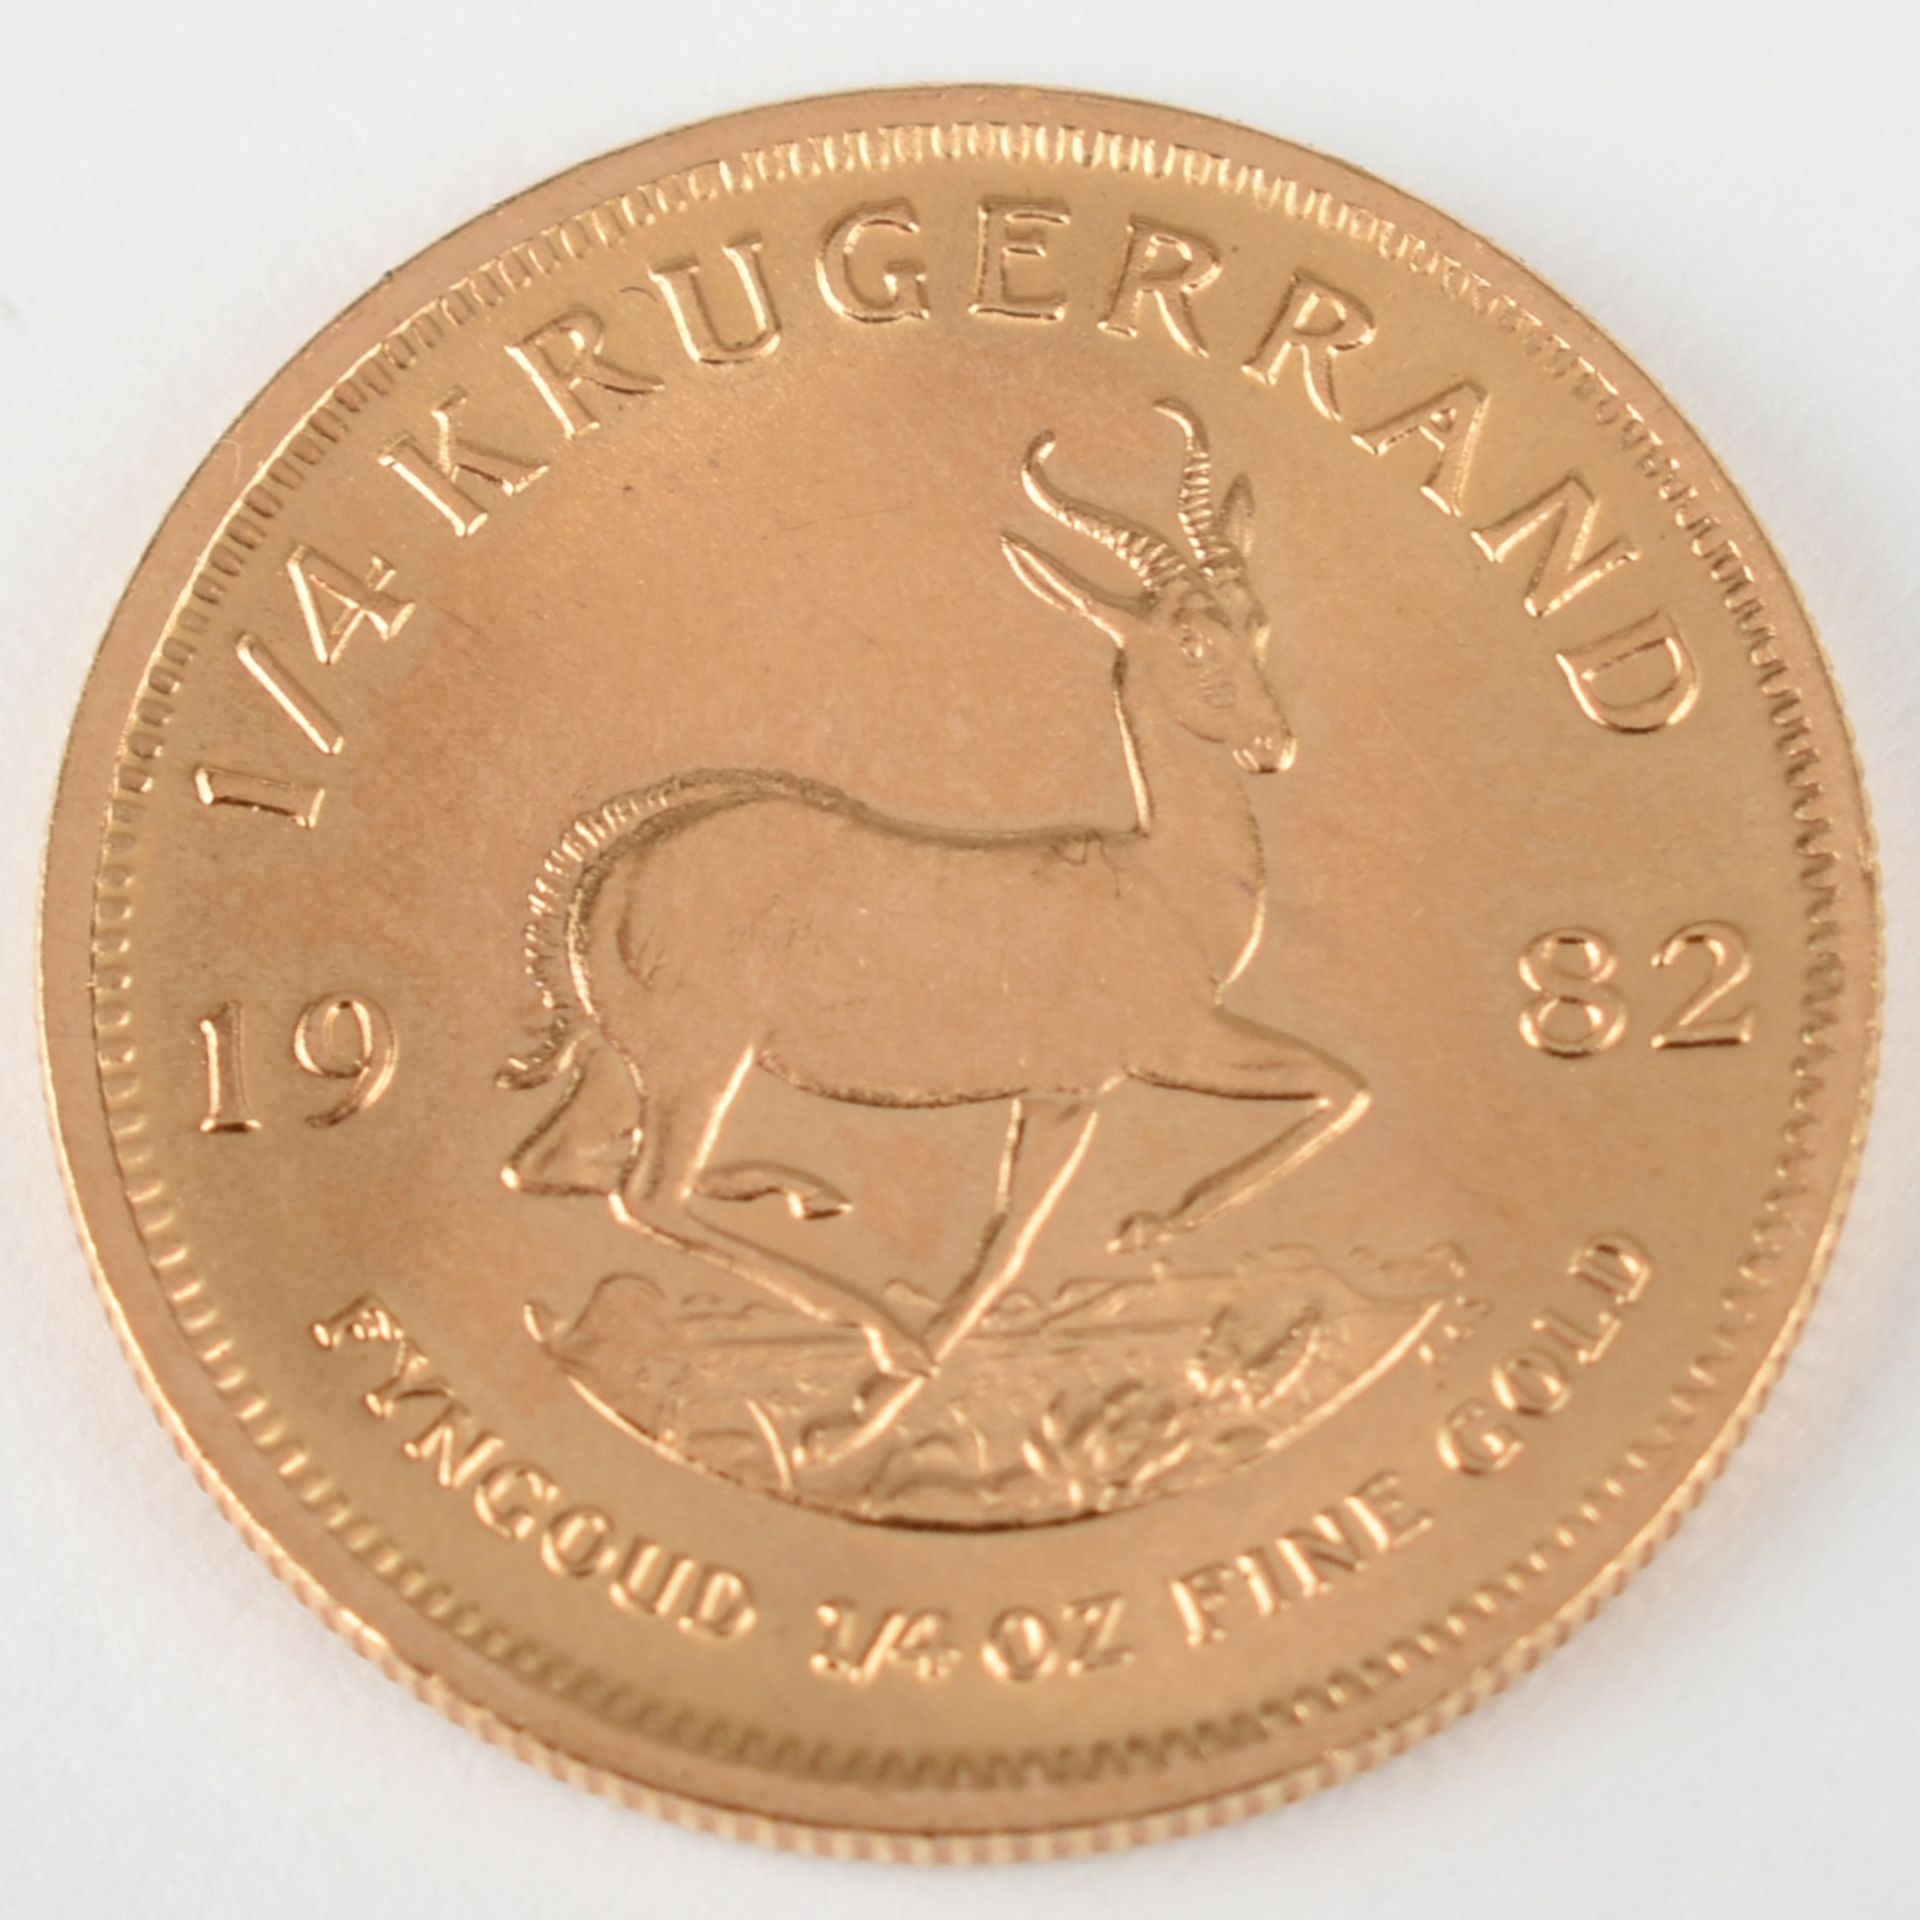 Goldmünze Südafrika 1982 Krügerrand, 1/4 oz in Gold, 916/1000, 8,482 g, D ca. 22 mm, av. Paul Kruger - Bild 2 aus 3